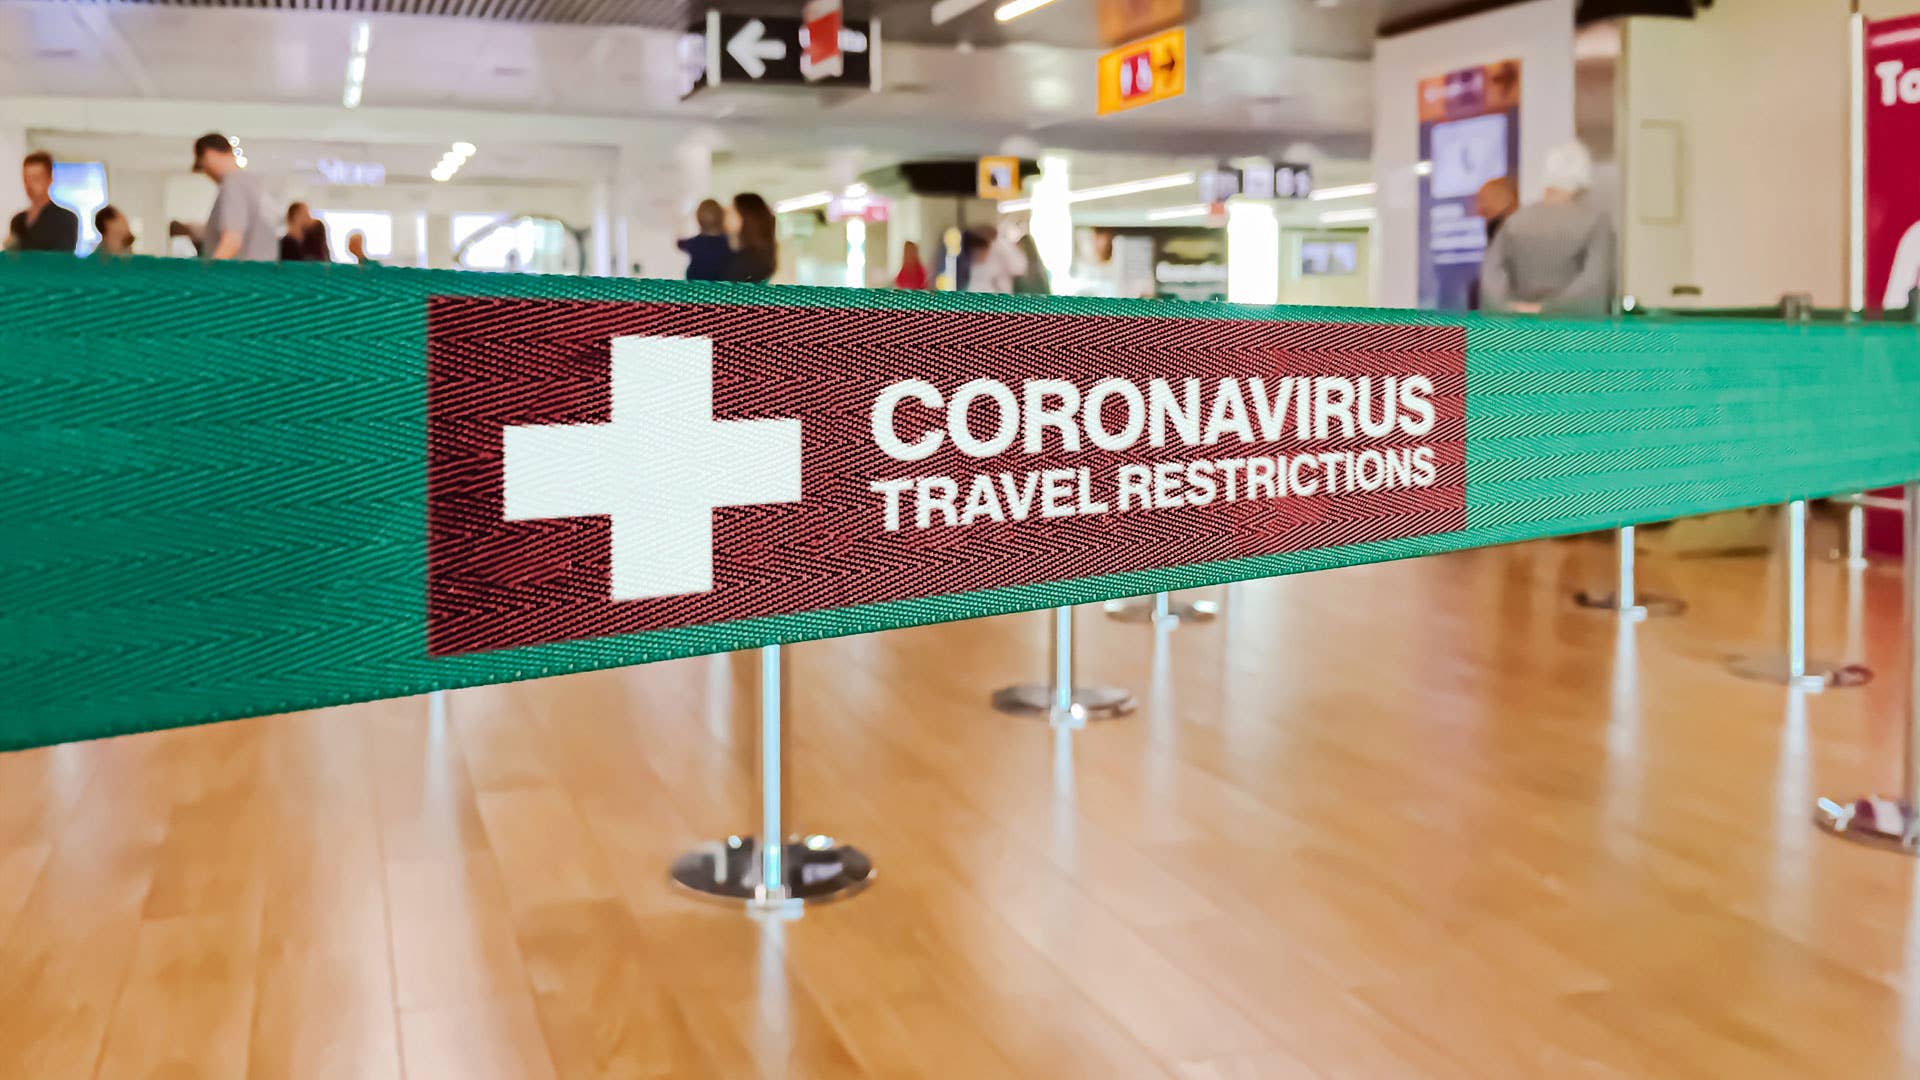 A sign advertising coronavirus travel restrictions.